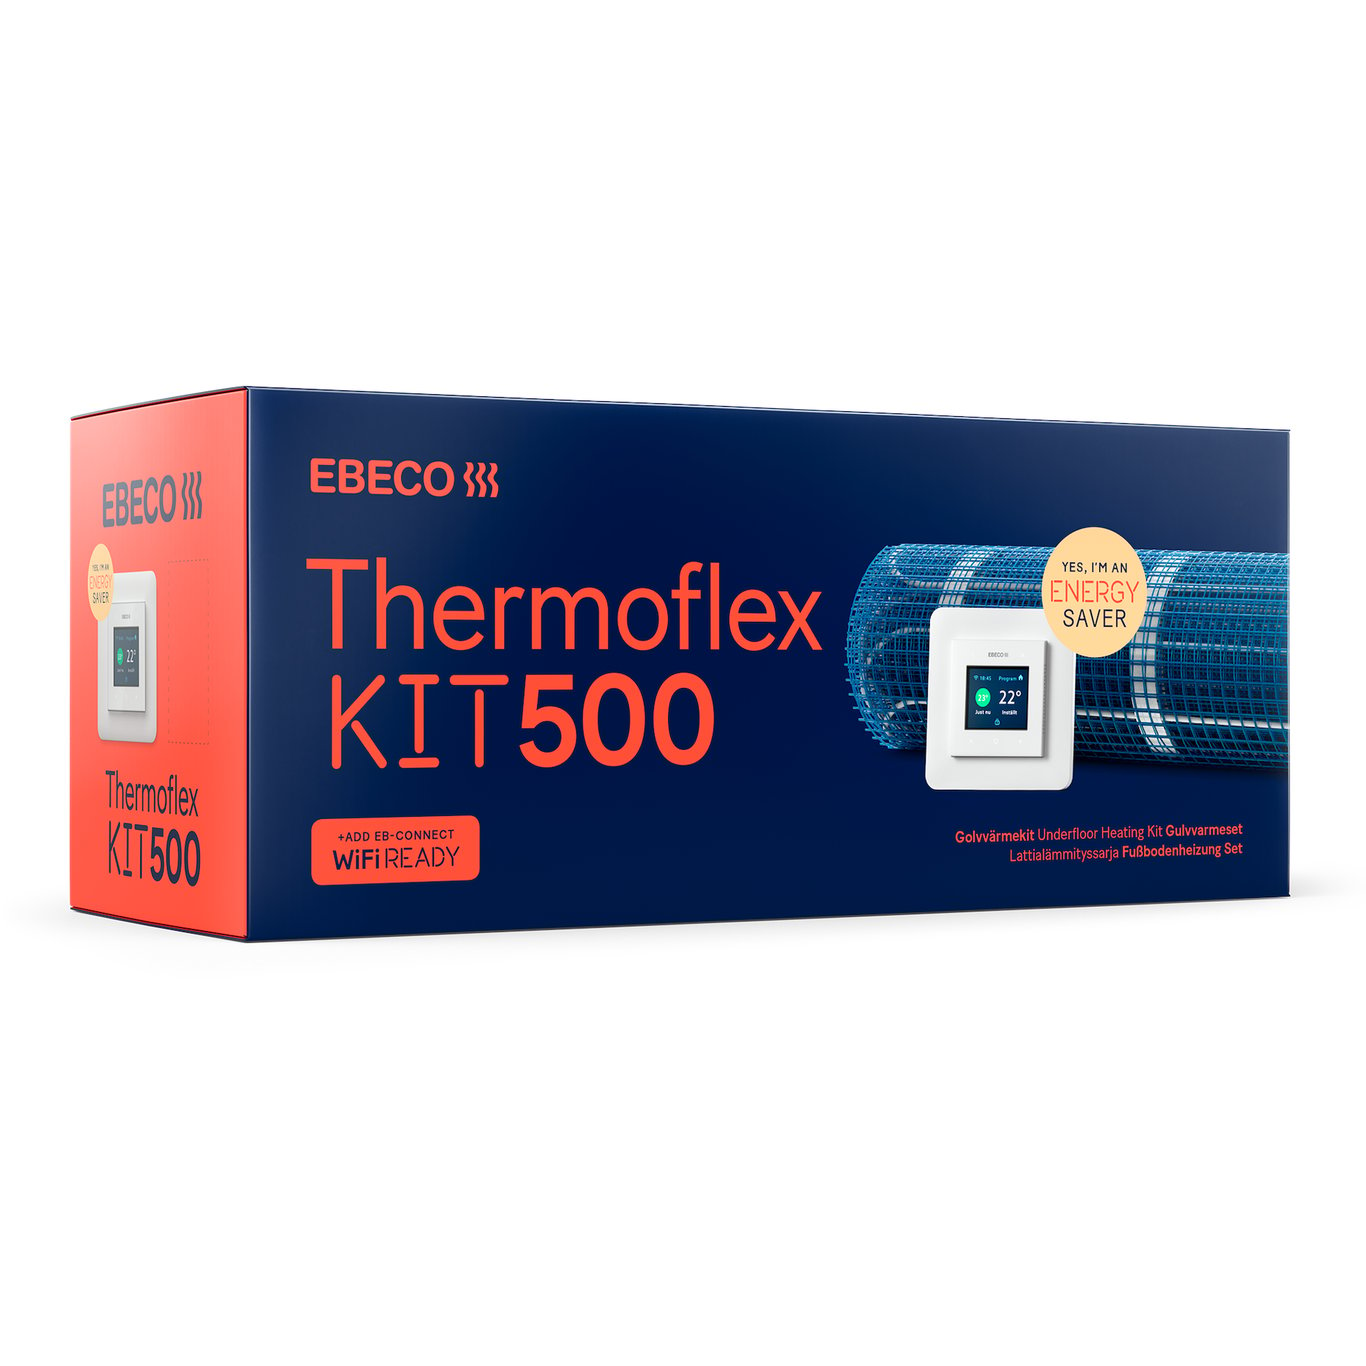 EBECO THERMOFLEX KIT 500 3,4M2 410W